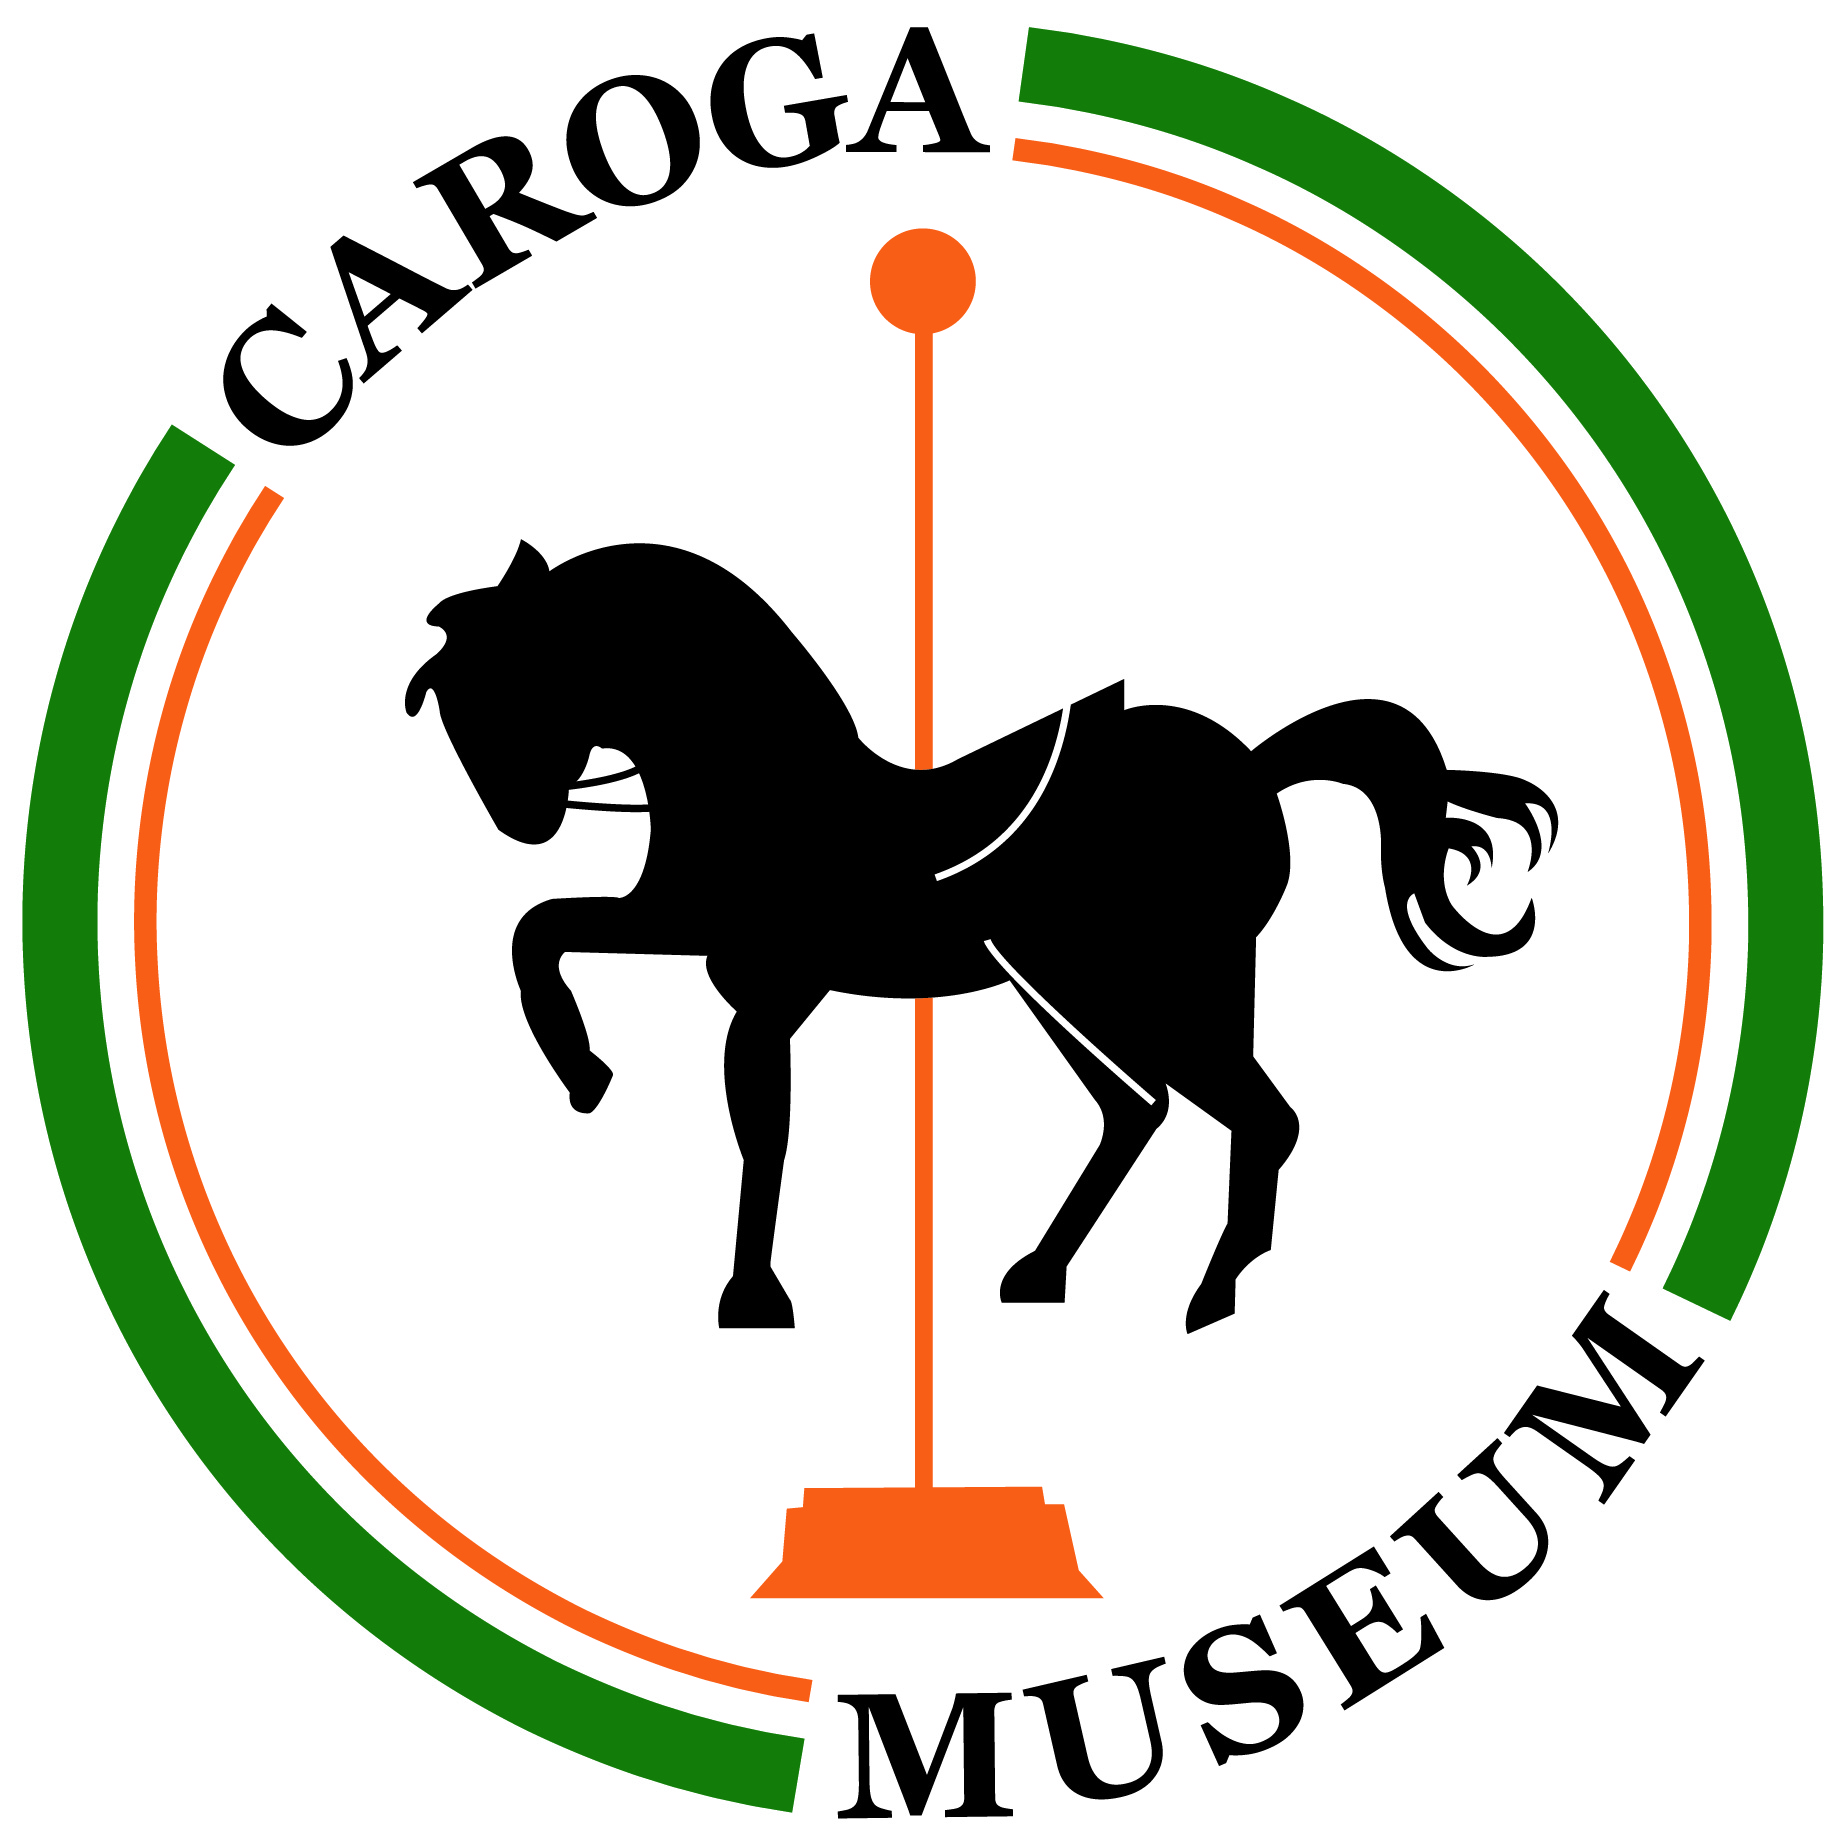 Caroga Historical Museum logo